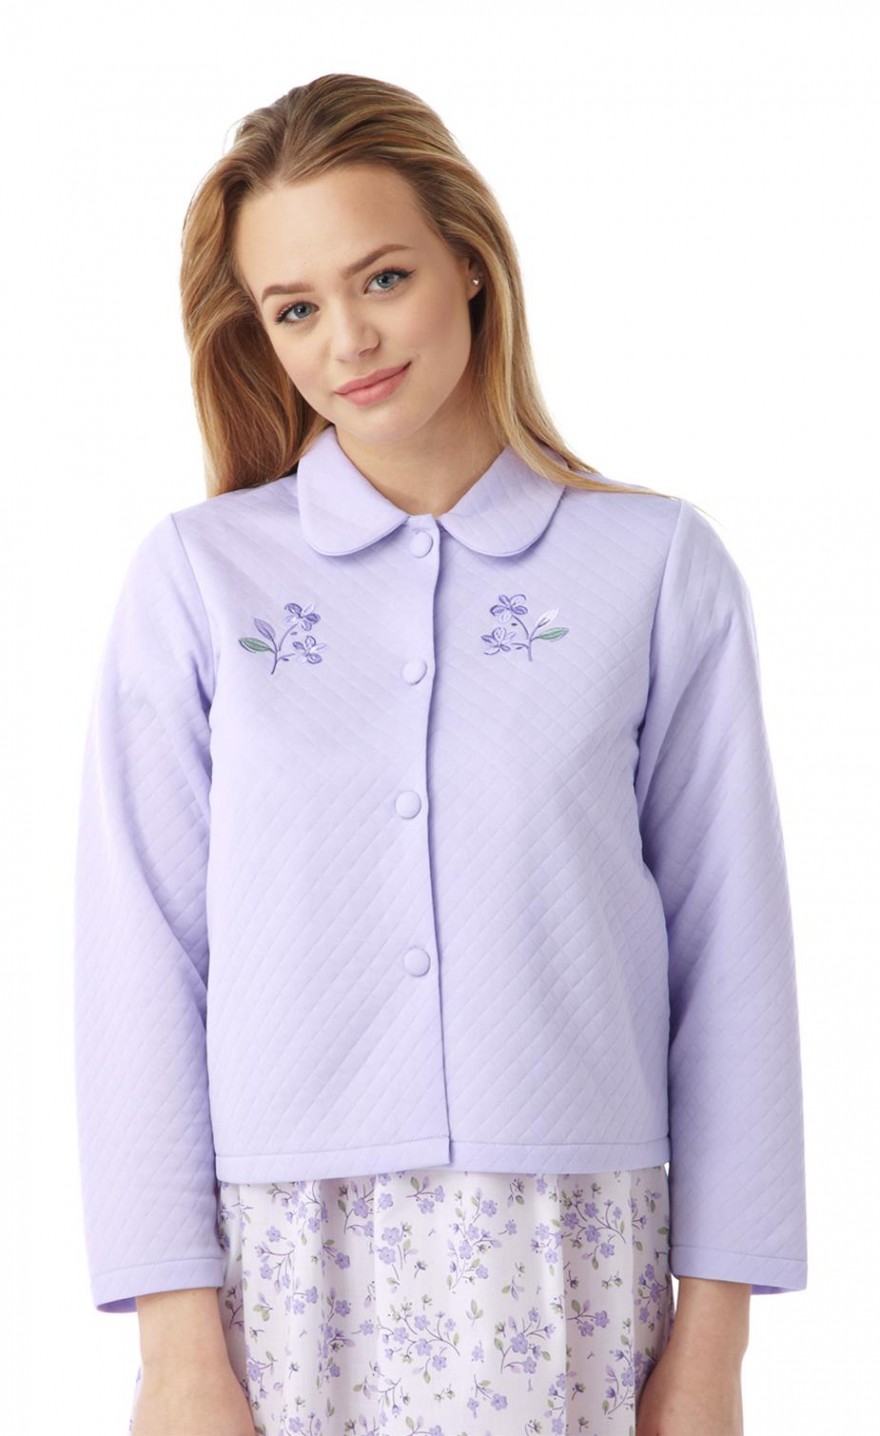 Knitted Plain mock quilt bedjacket Ma08772